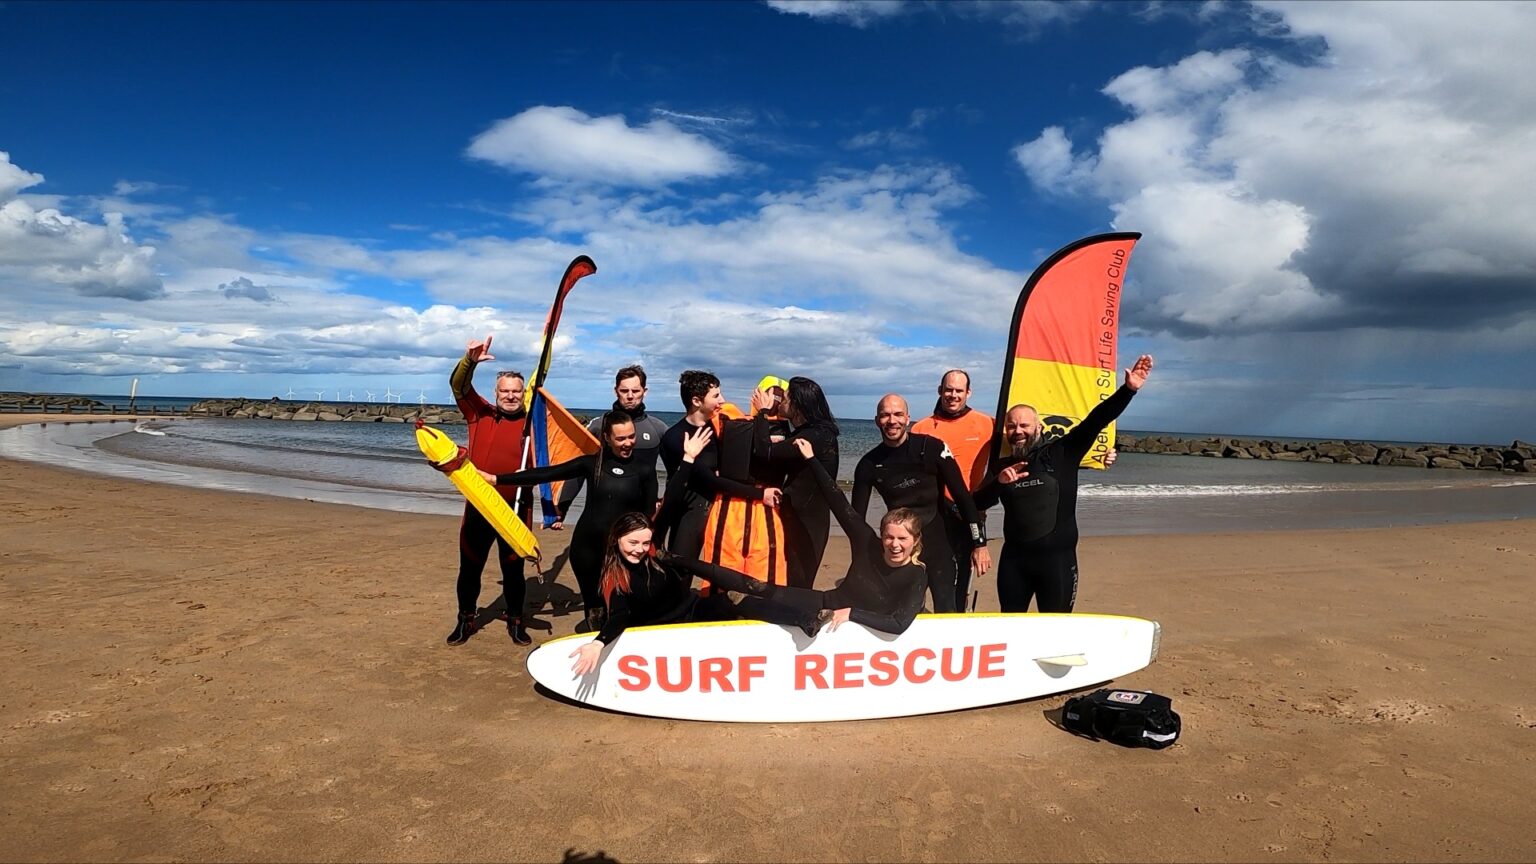 About Aberdeen Surf Life Saving Club - ASLSC